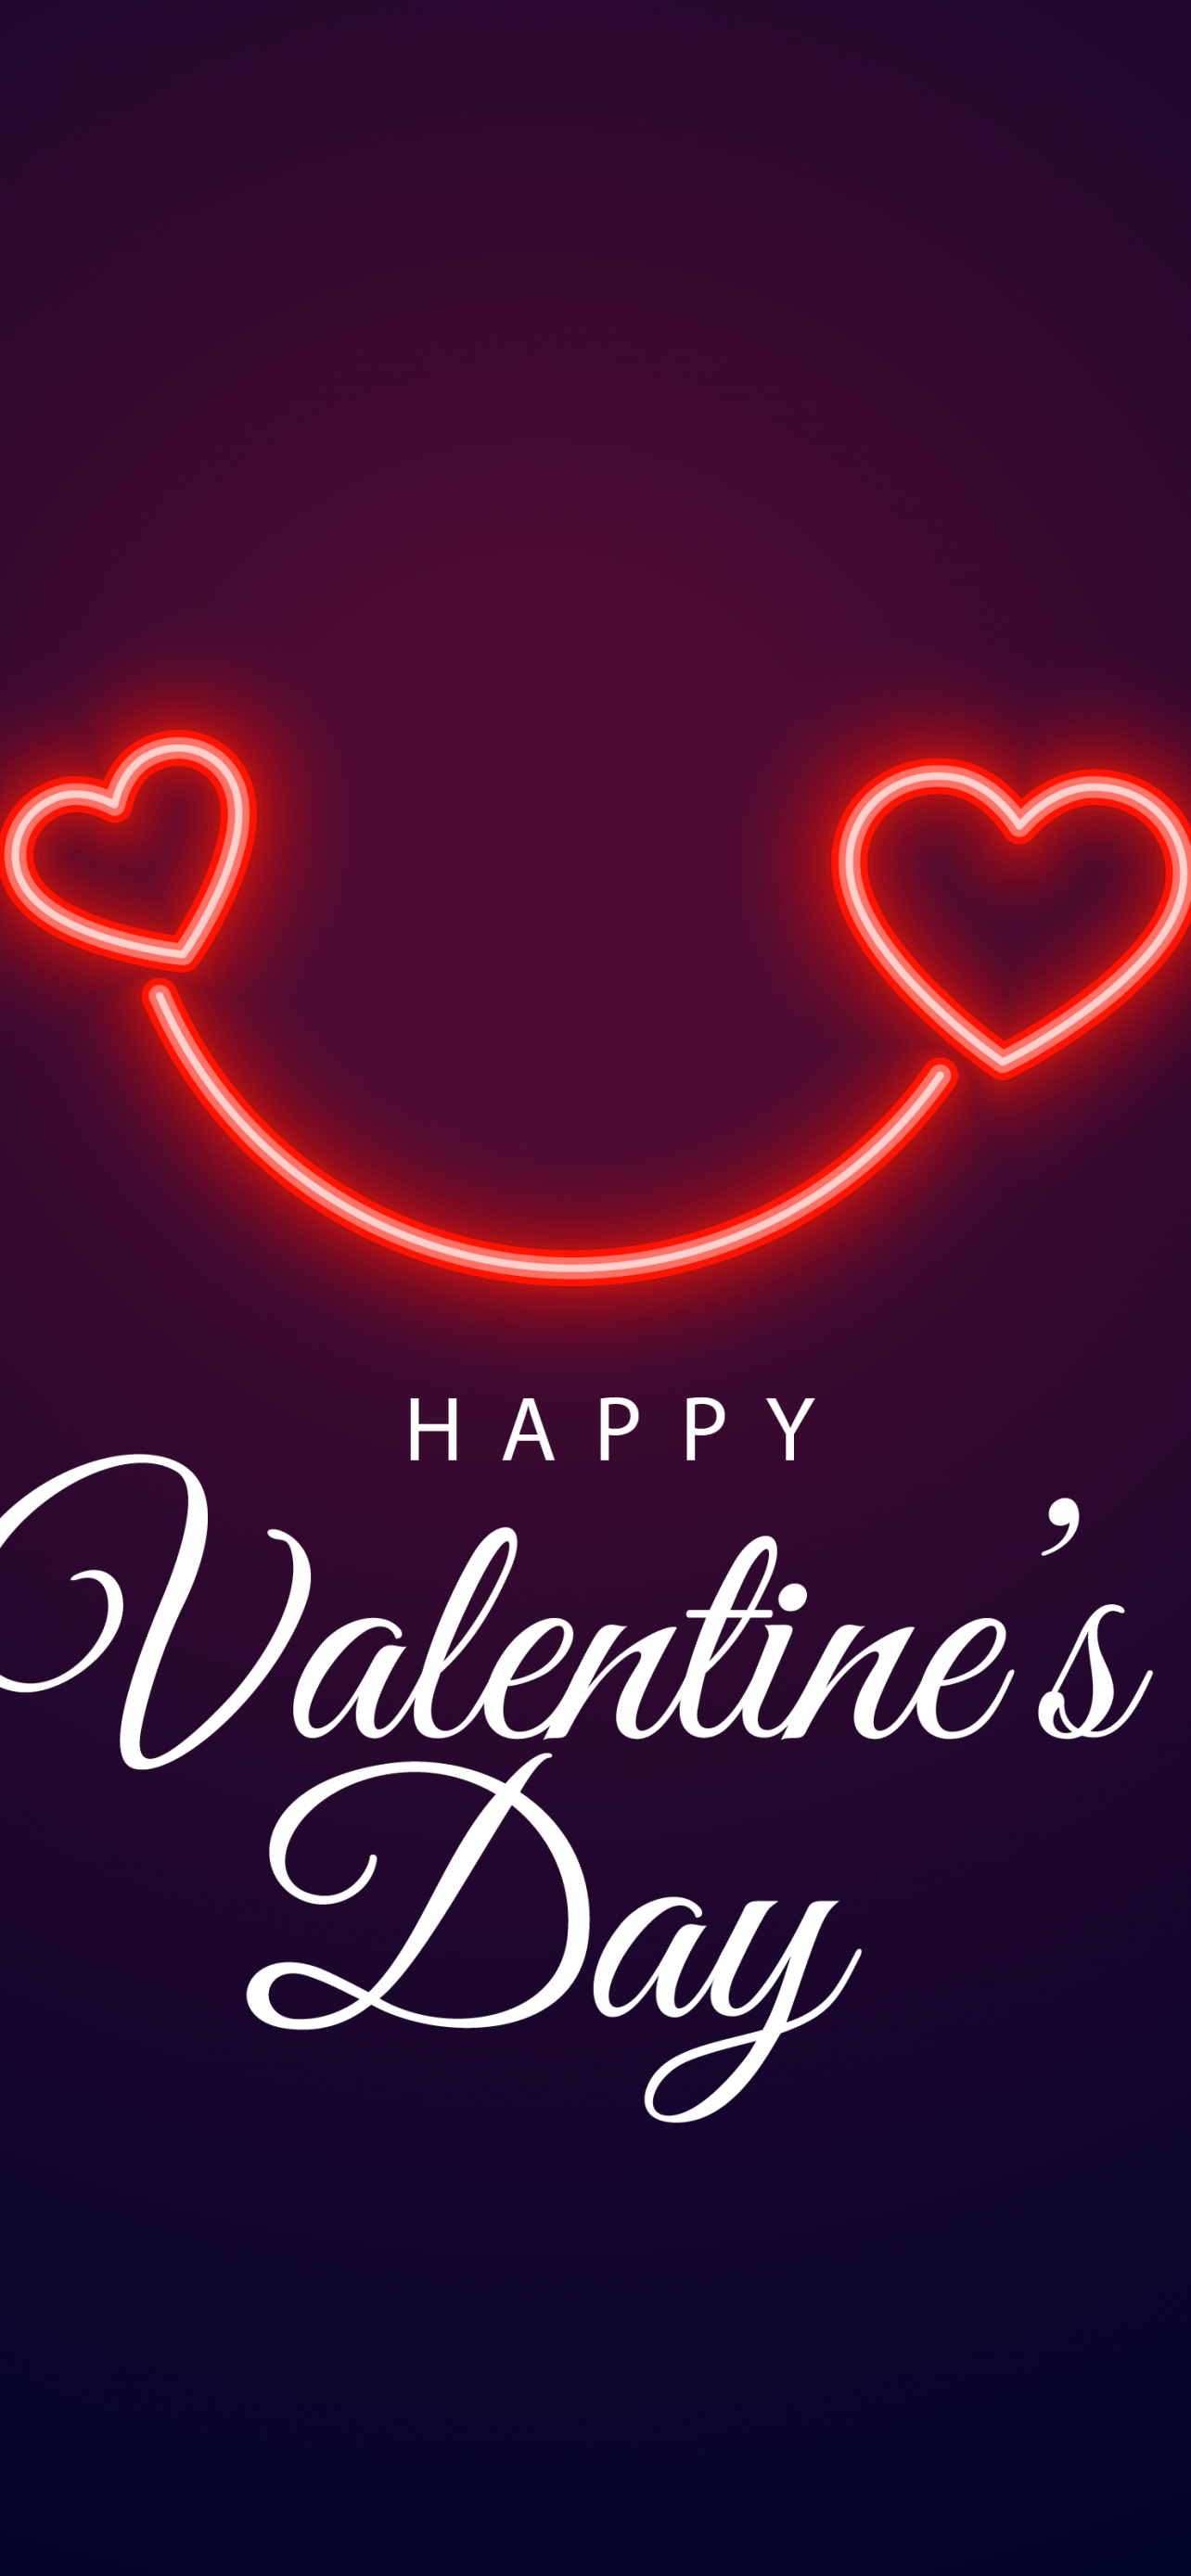 Happy Valentine's Day Wallpaper 4K, February 14th, Celebrations/Valentine's  Day, #8391